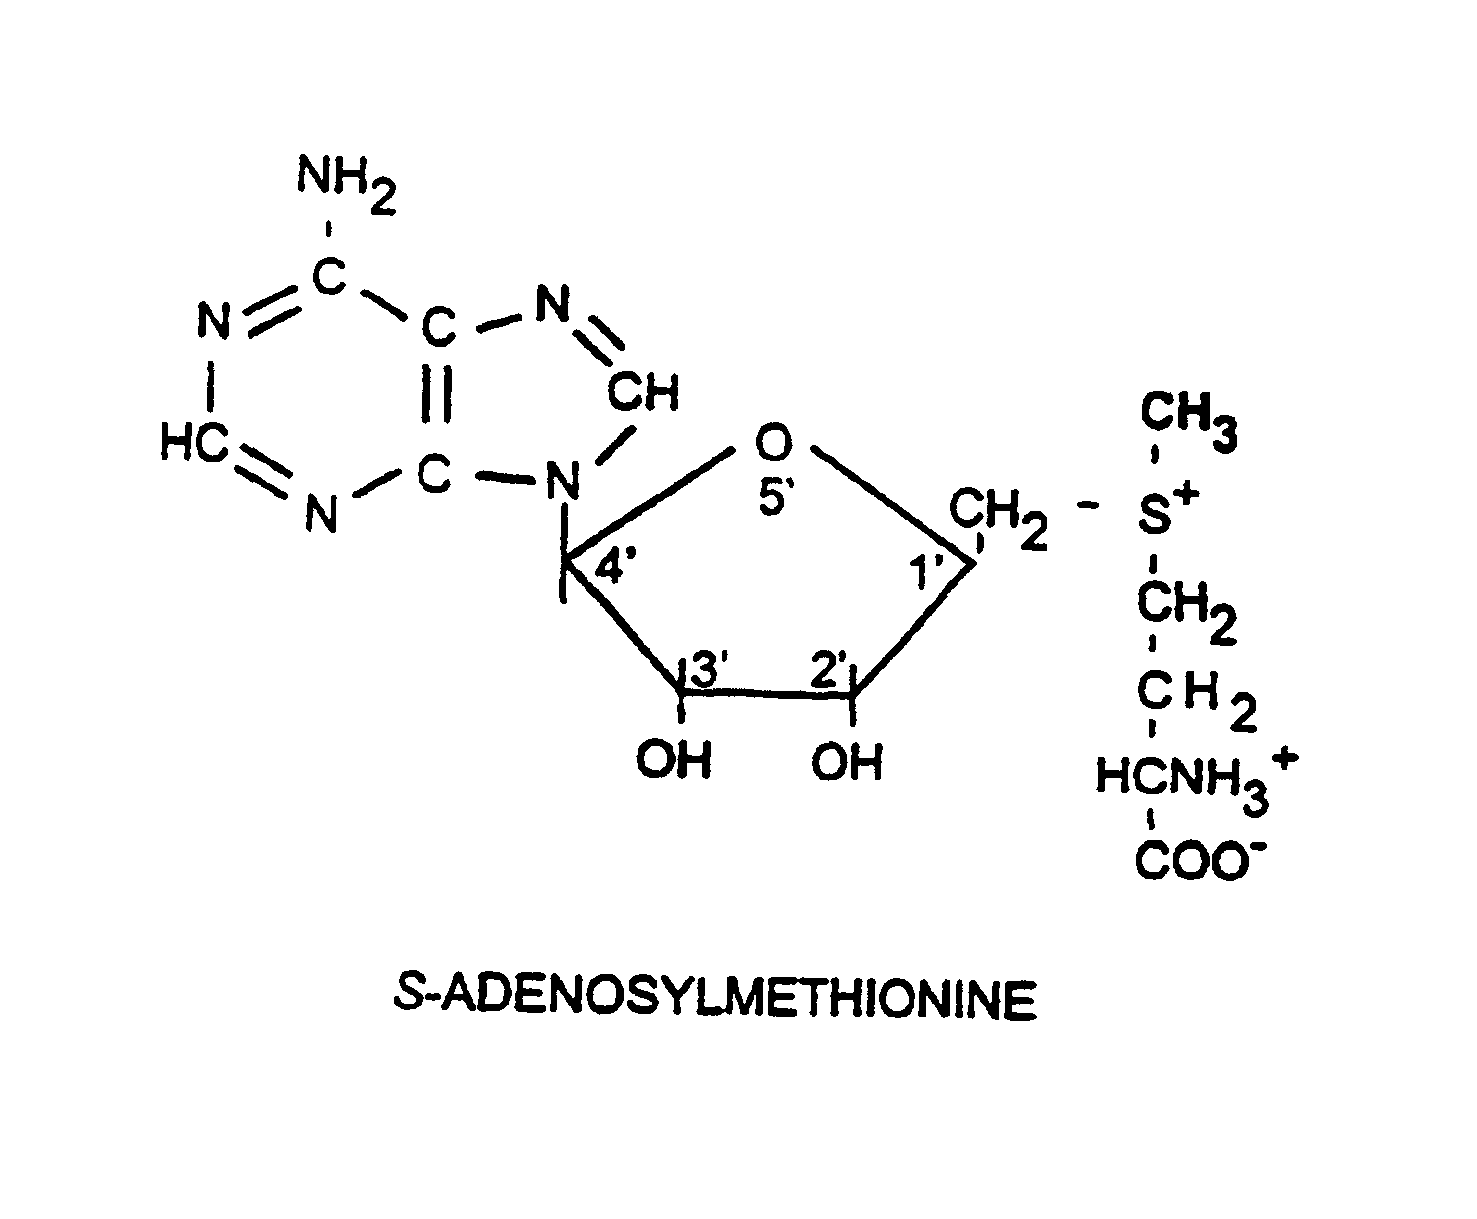 L-ergothioneine, milk thistle, and S-adenosylmethionine for the prevention, treatment and repair of liver damage